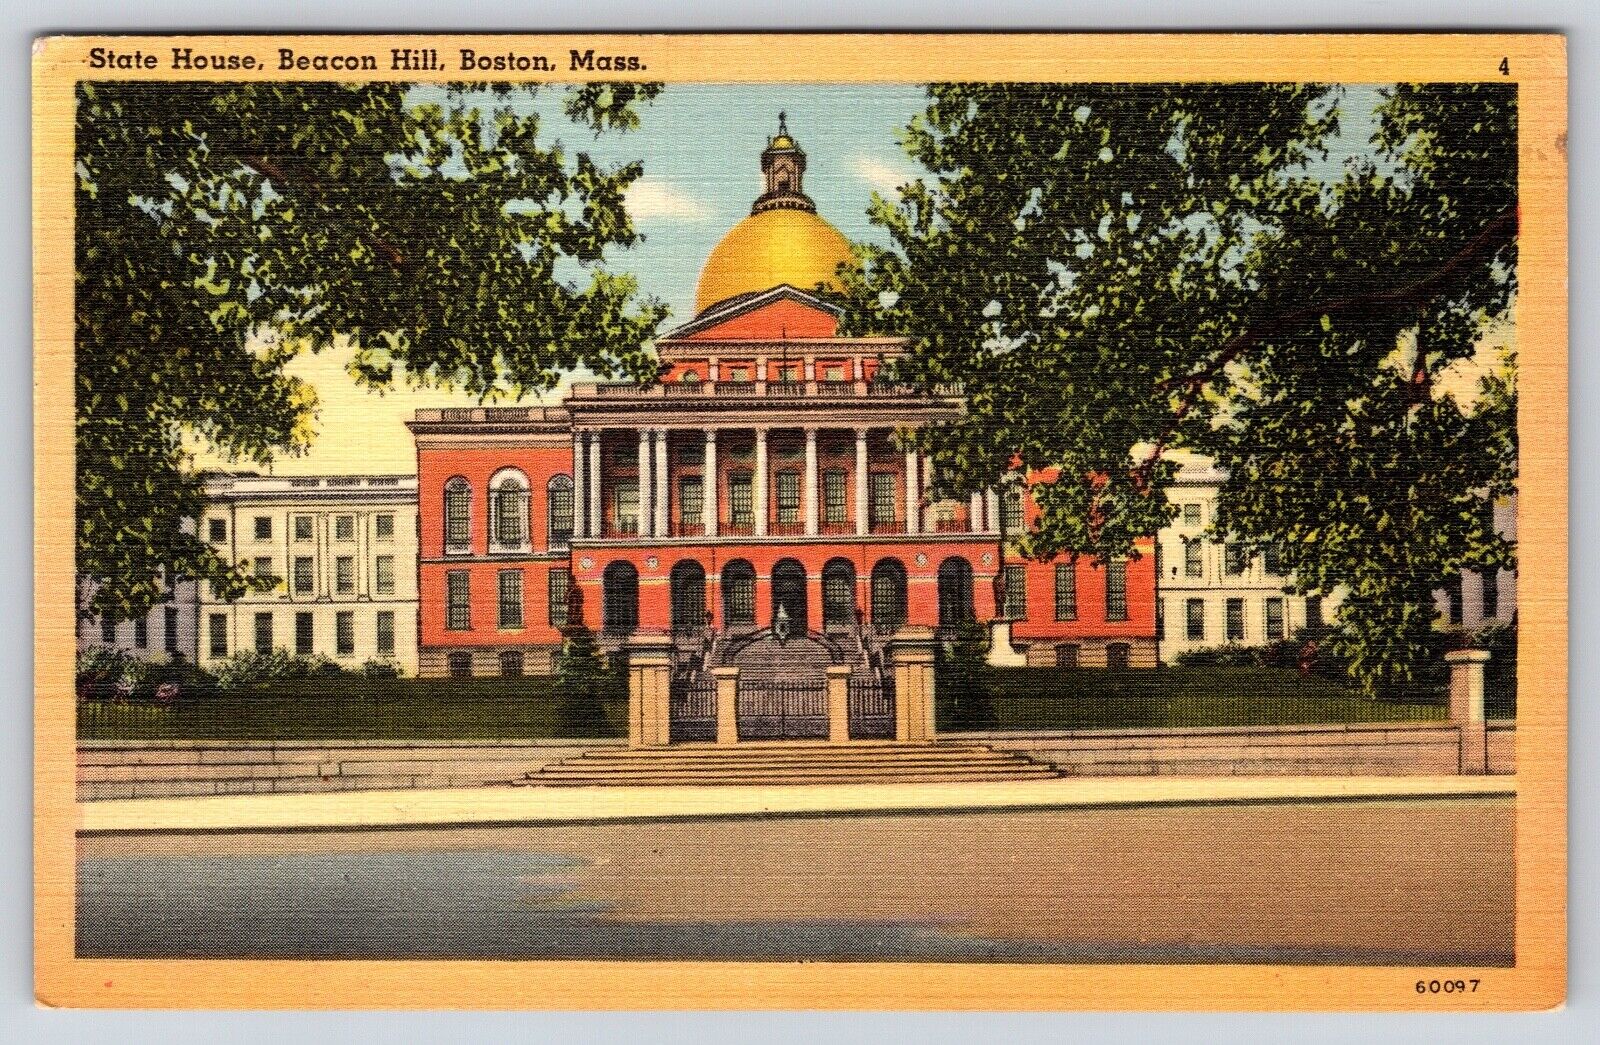 State House, Beacon Hill, Boston, Massachusetts 1941 Vintage Linen Postcard